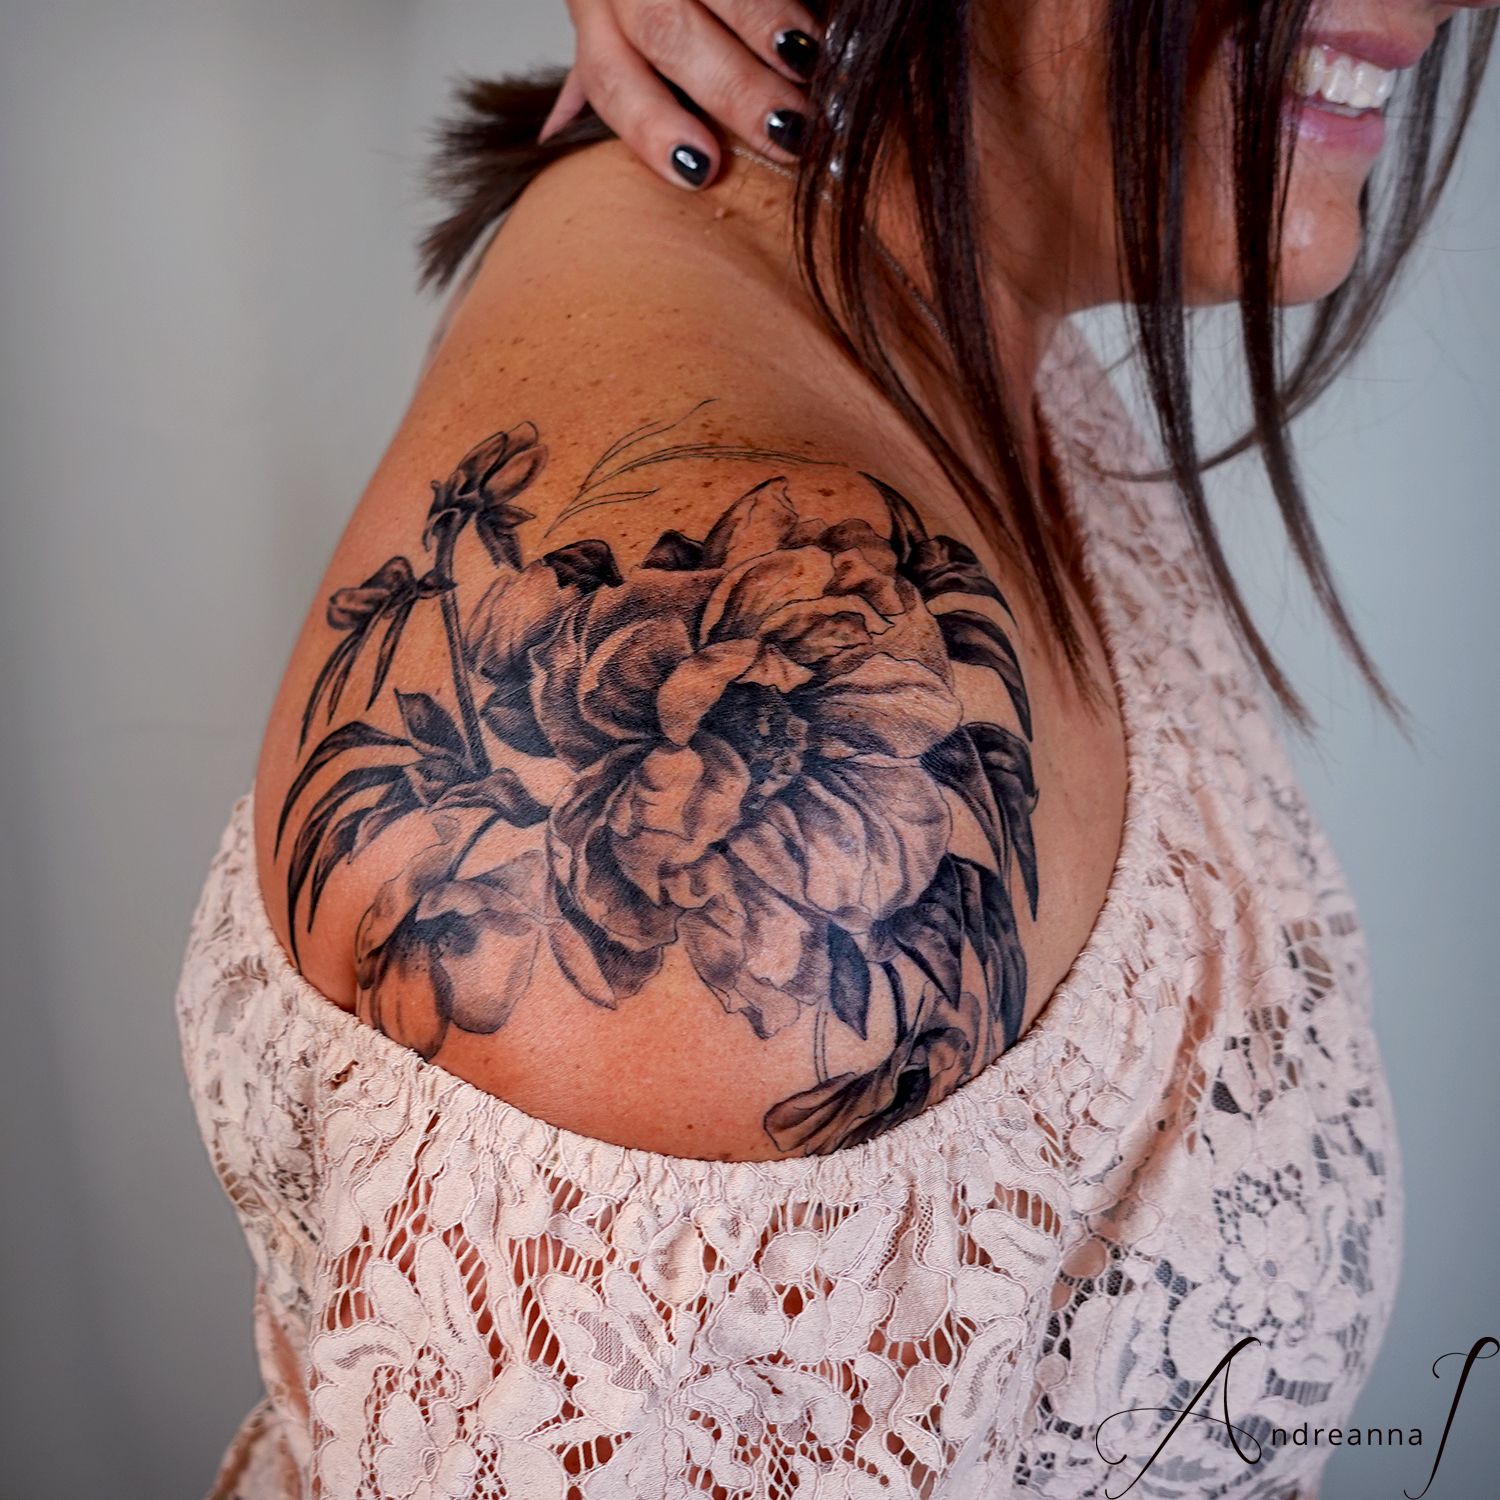 tattoo – Portfolio of A Montreal Tattoo Artist